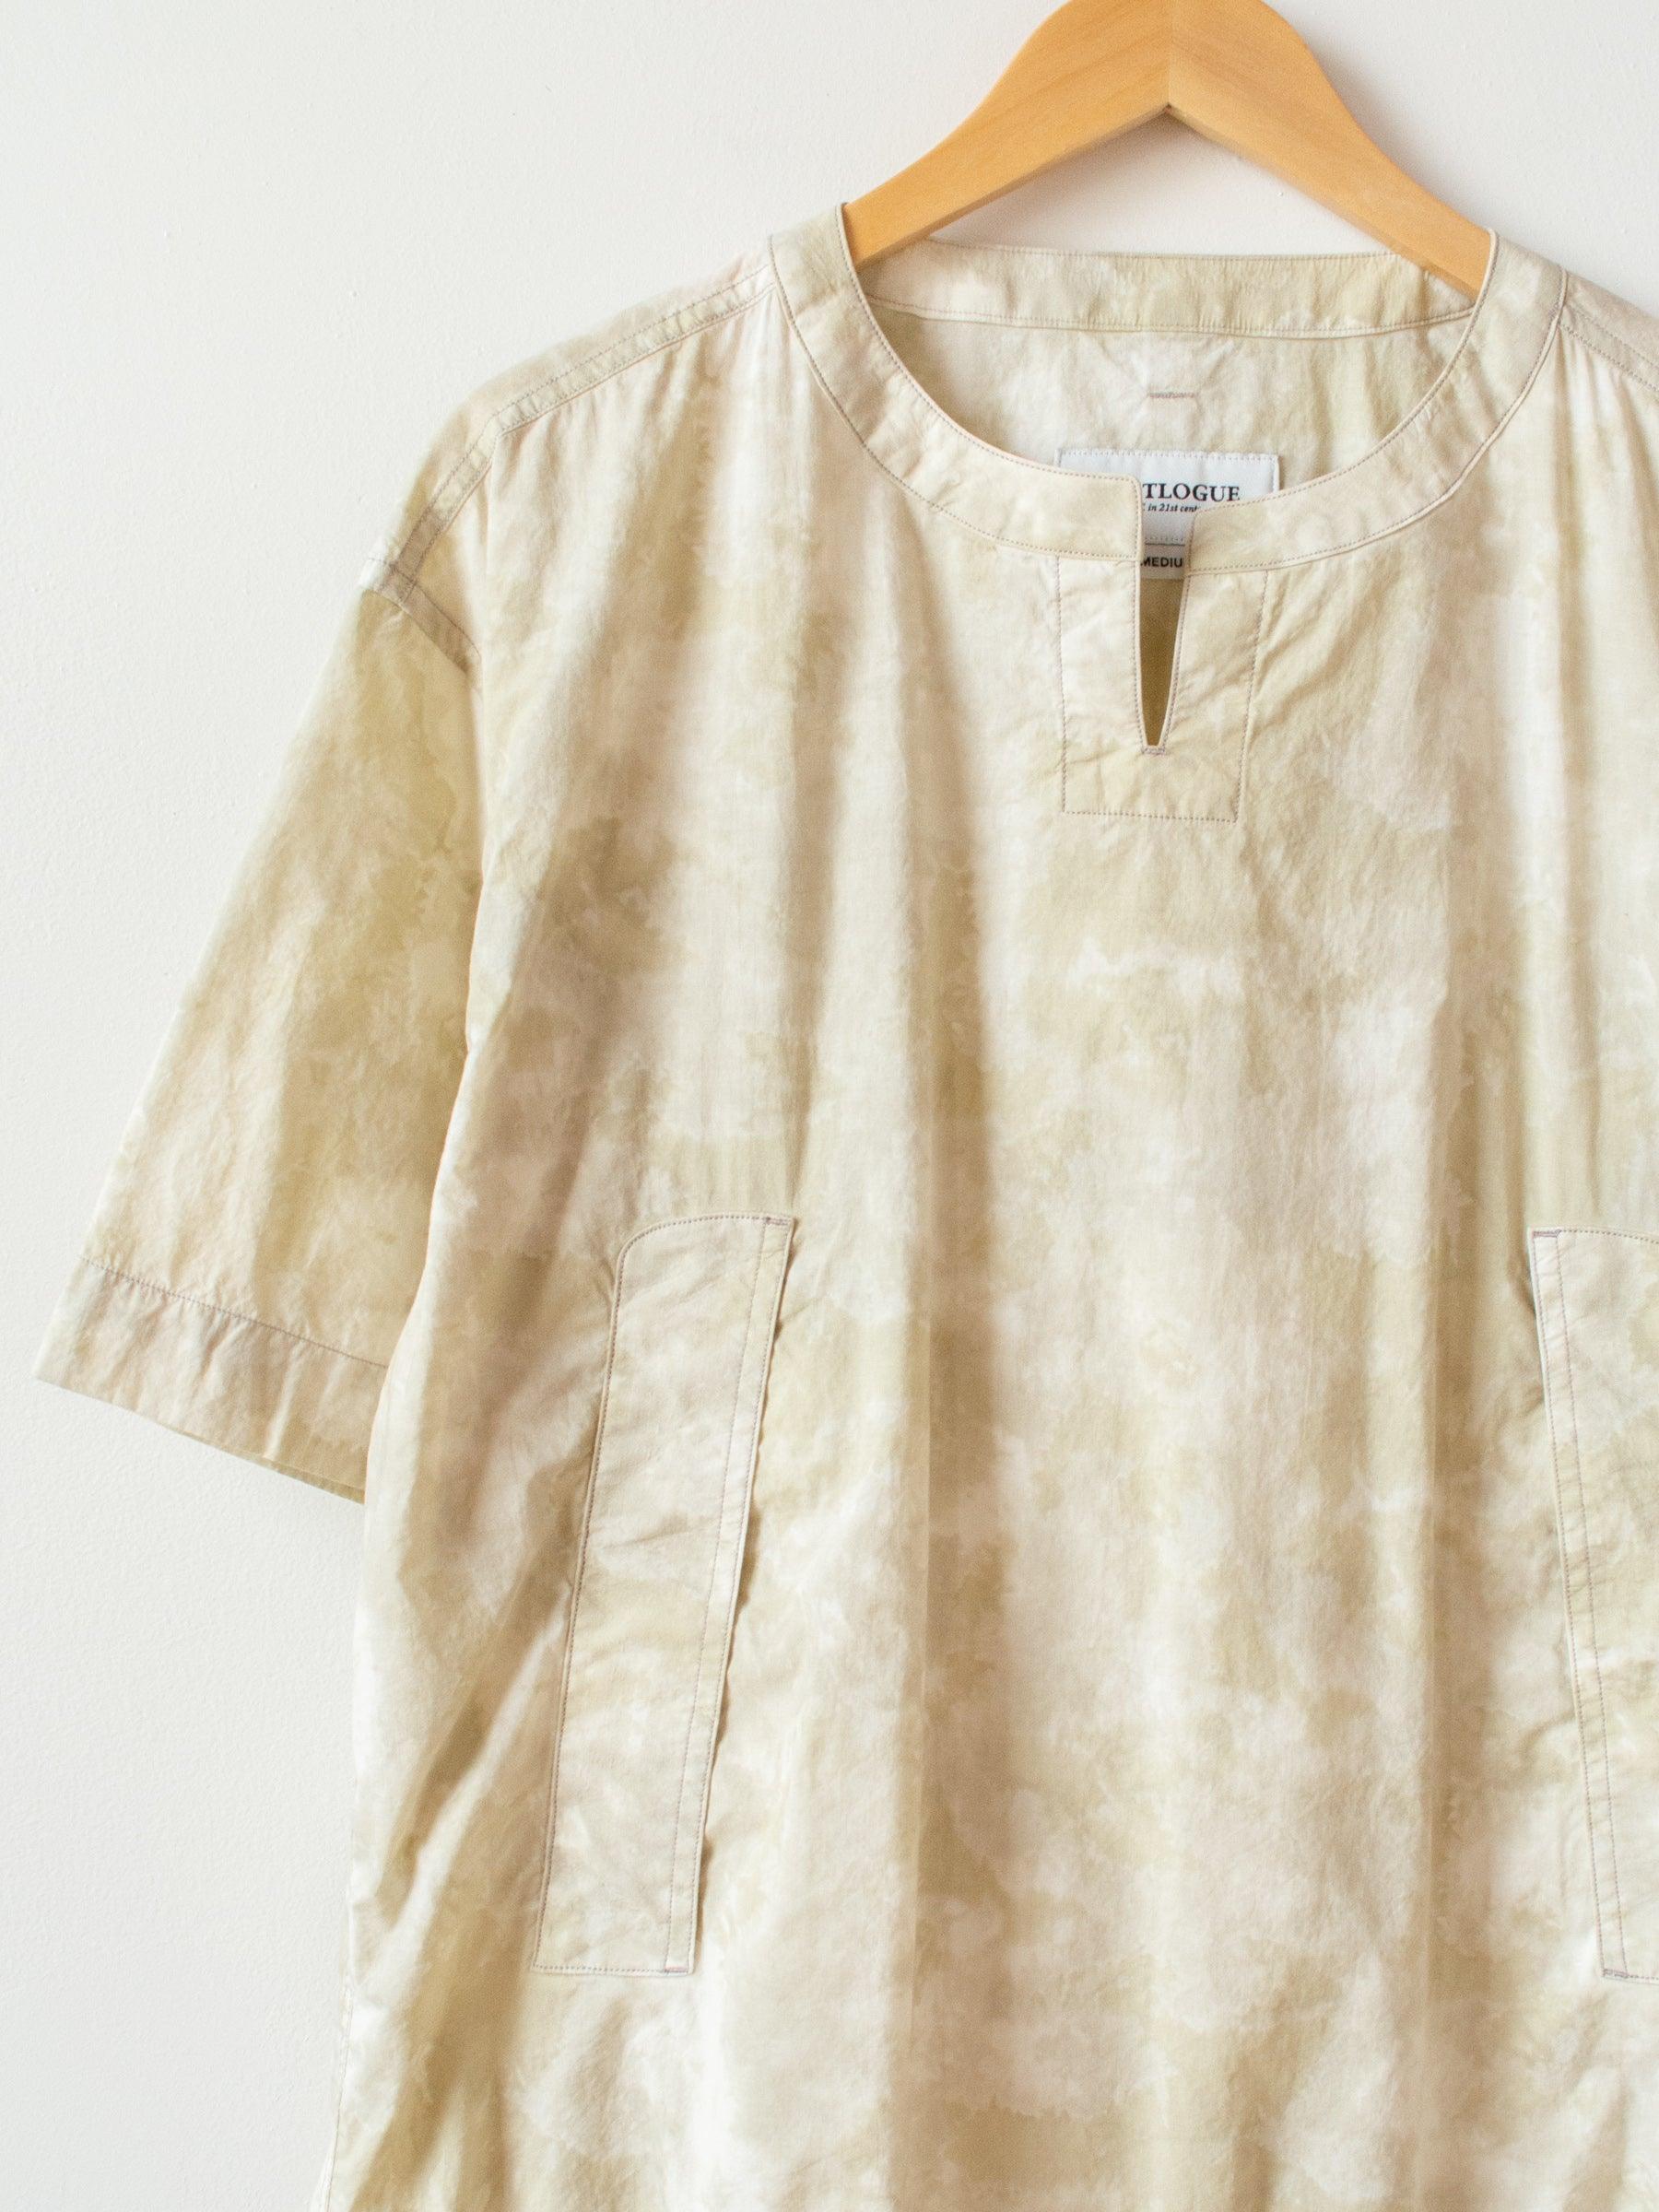 Namu Shop - Eastlogue Field Pullover Half Shirt - White Hand Dyed